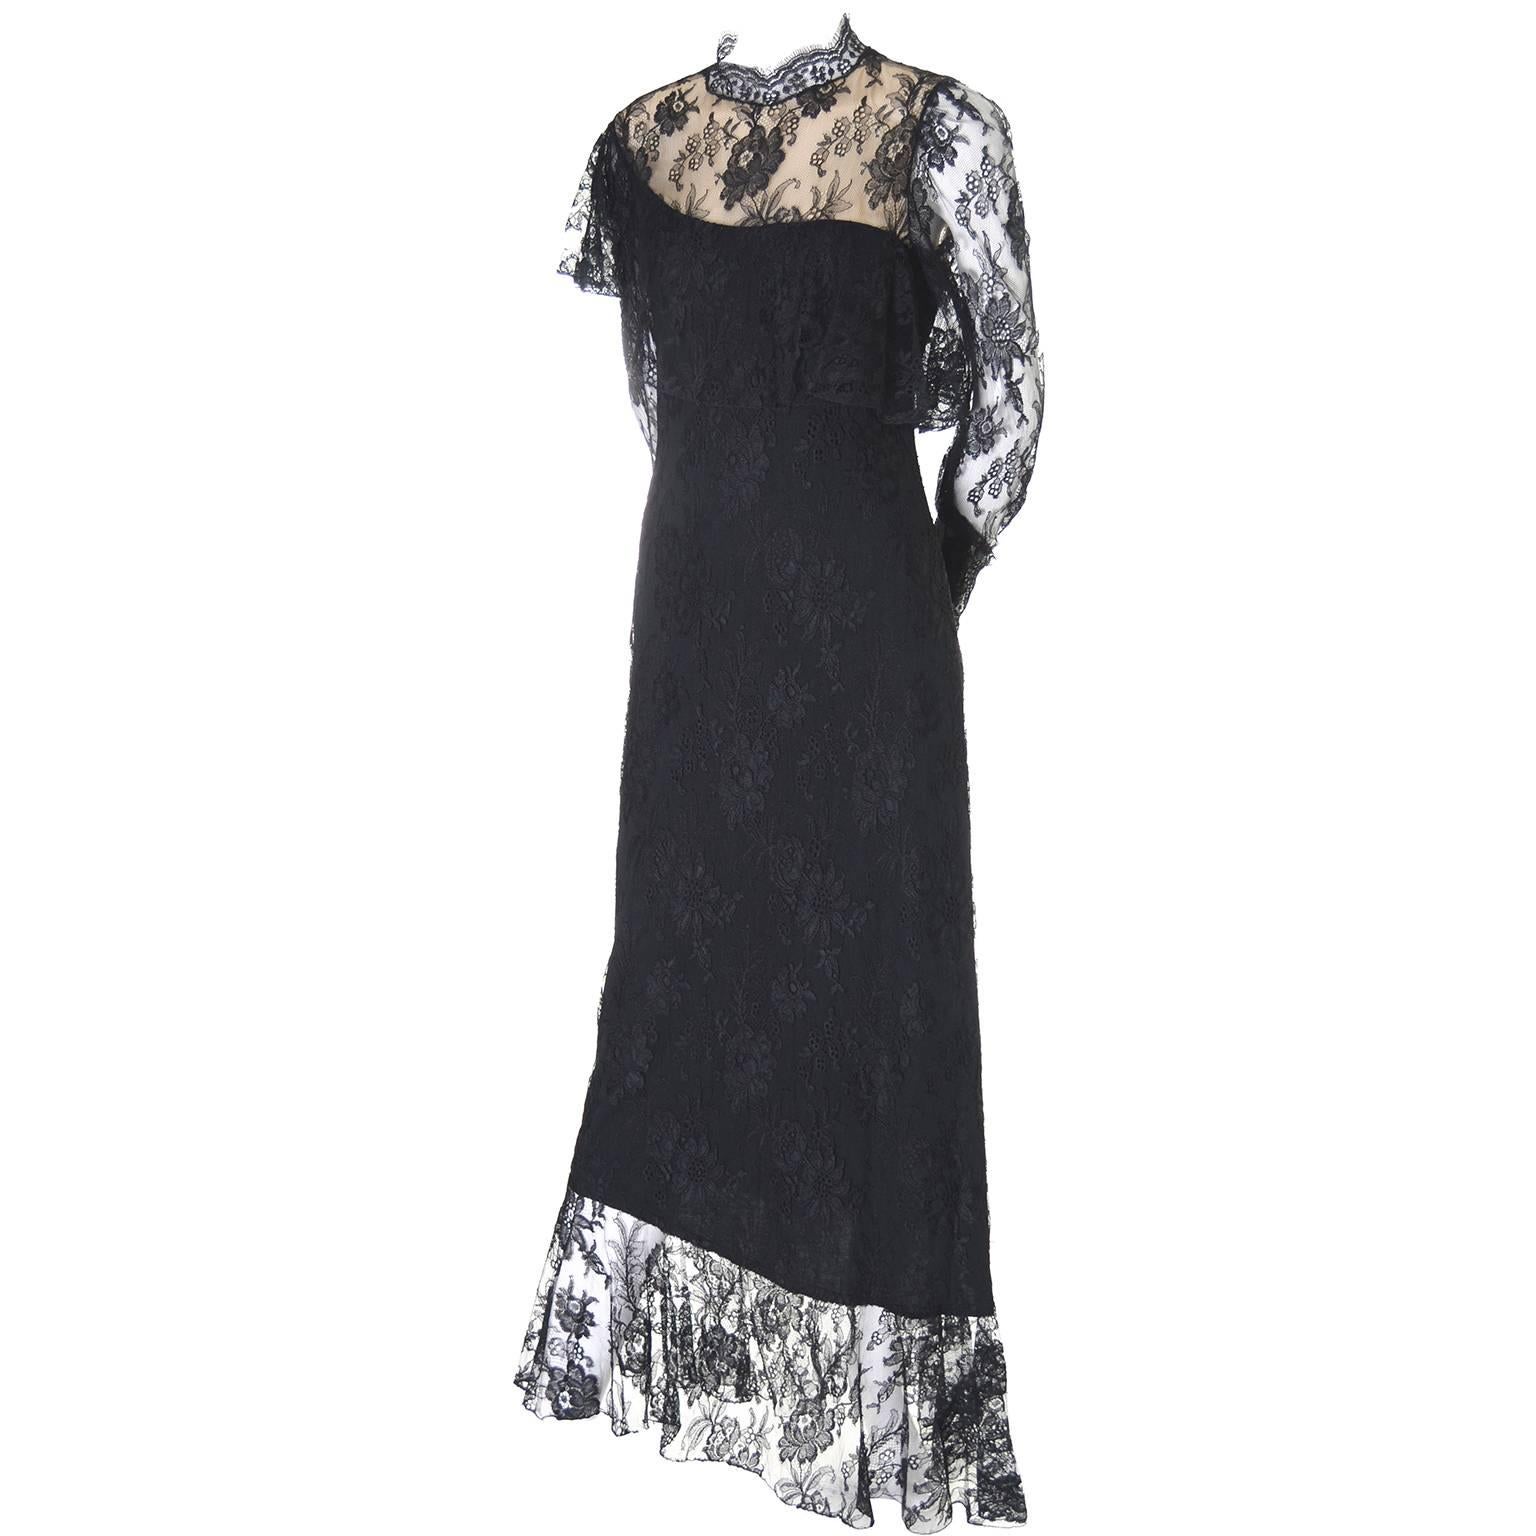 Loris Azzaro Vintage Dress Black Lace Victorian Style 1980s Evening Gown France